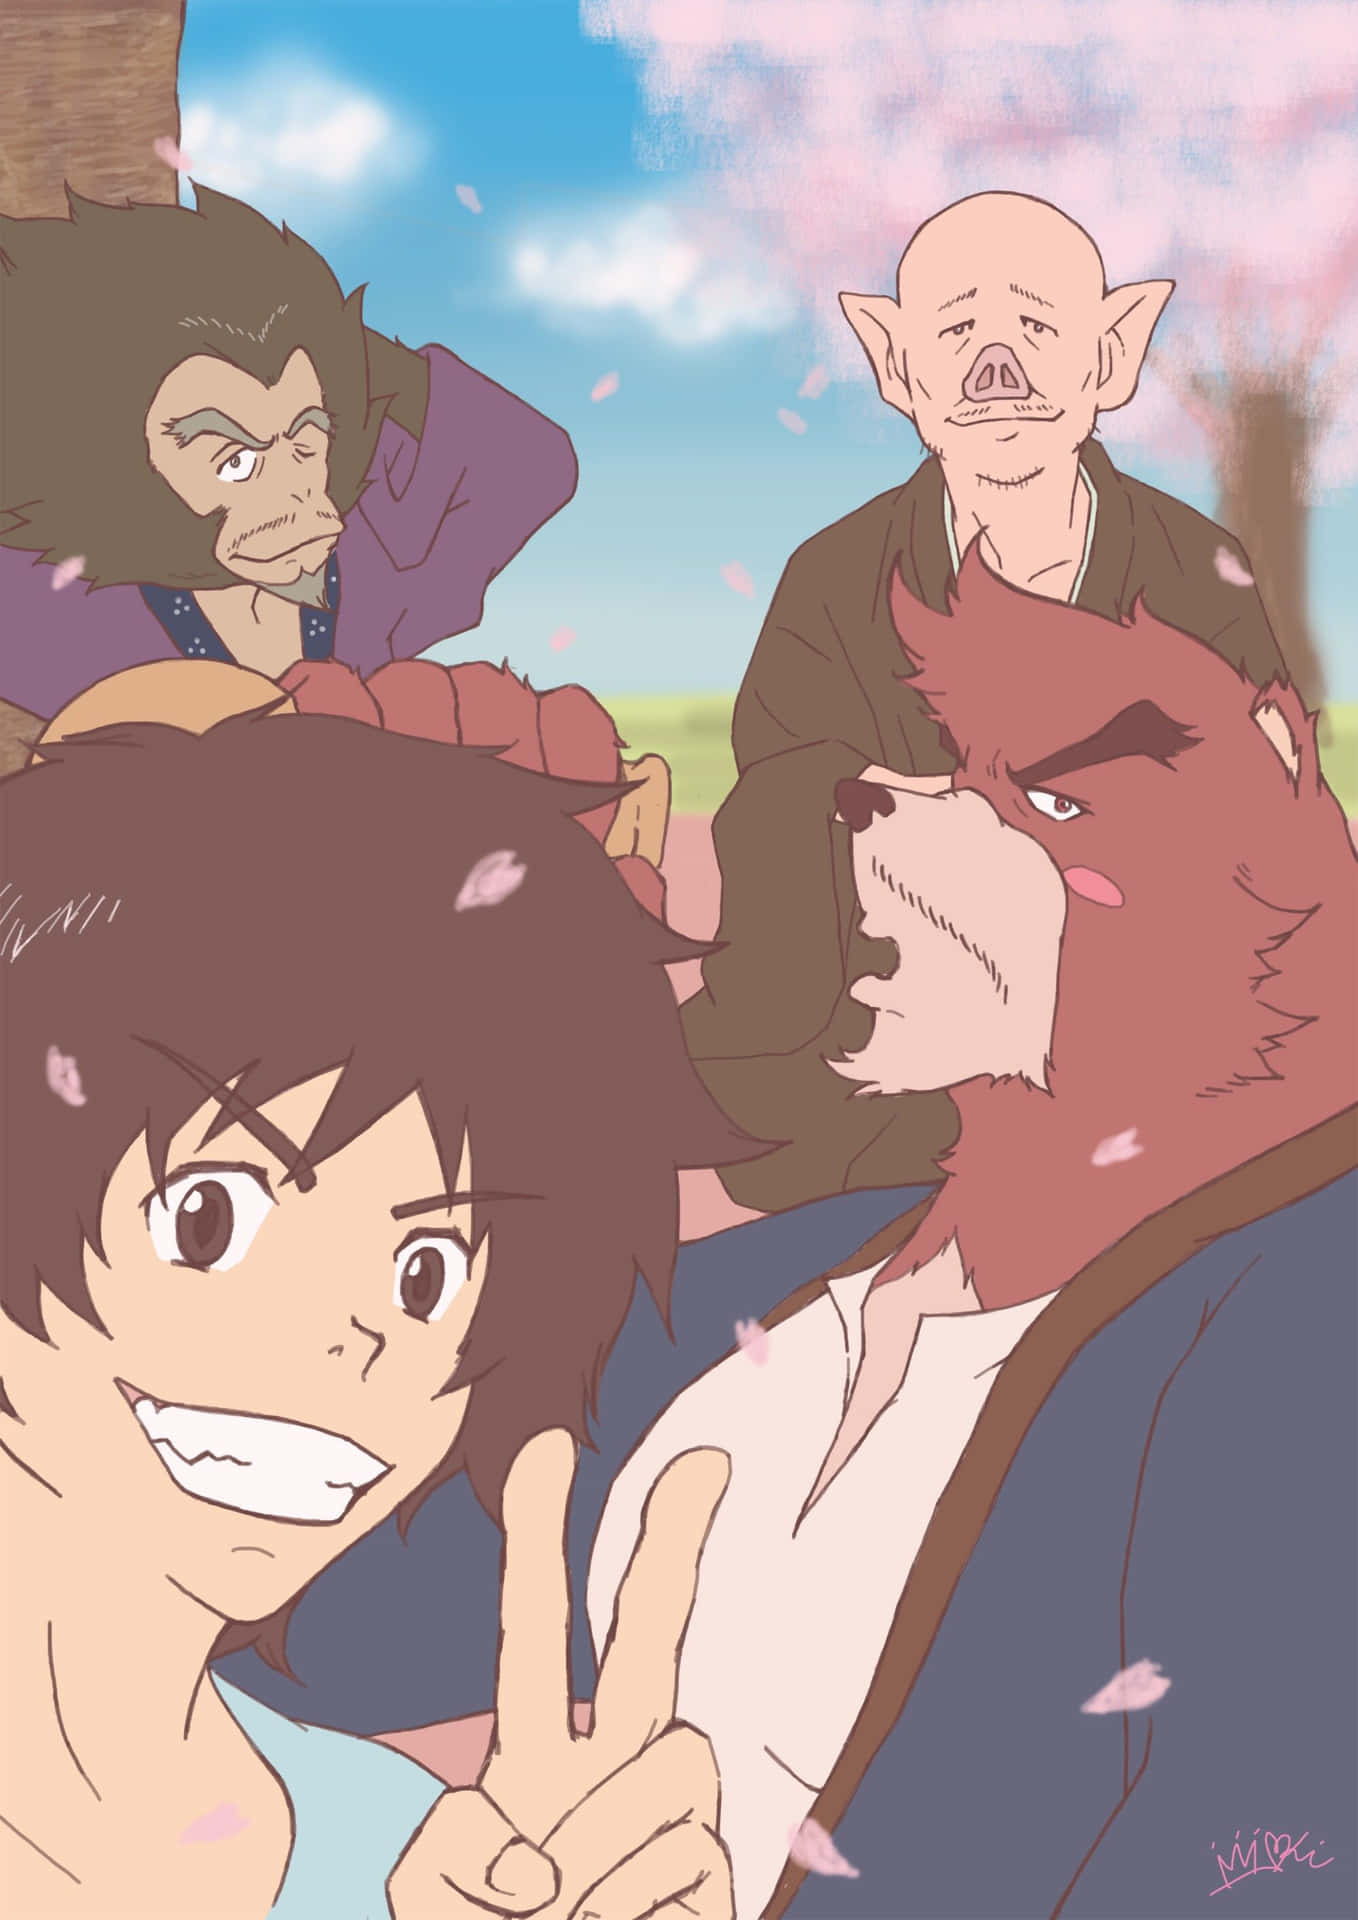 A young boy, Kyuta, and his companion, the beast Kumatetsu, embark on an epic adventure. Wallpaper